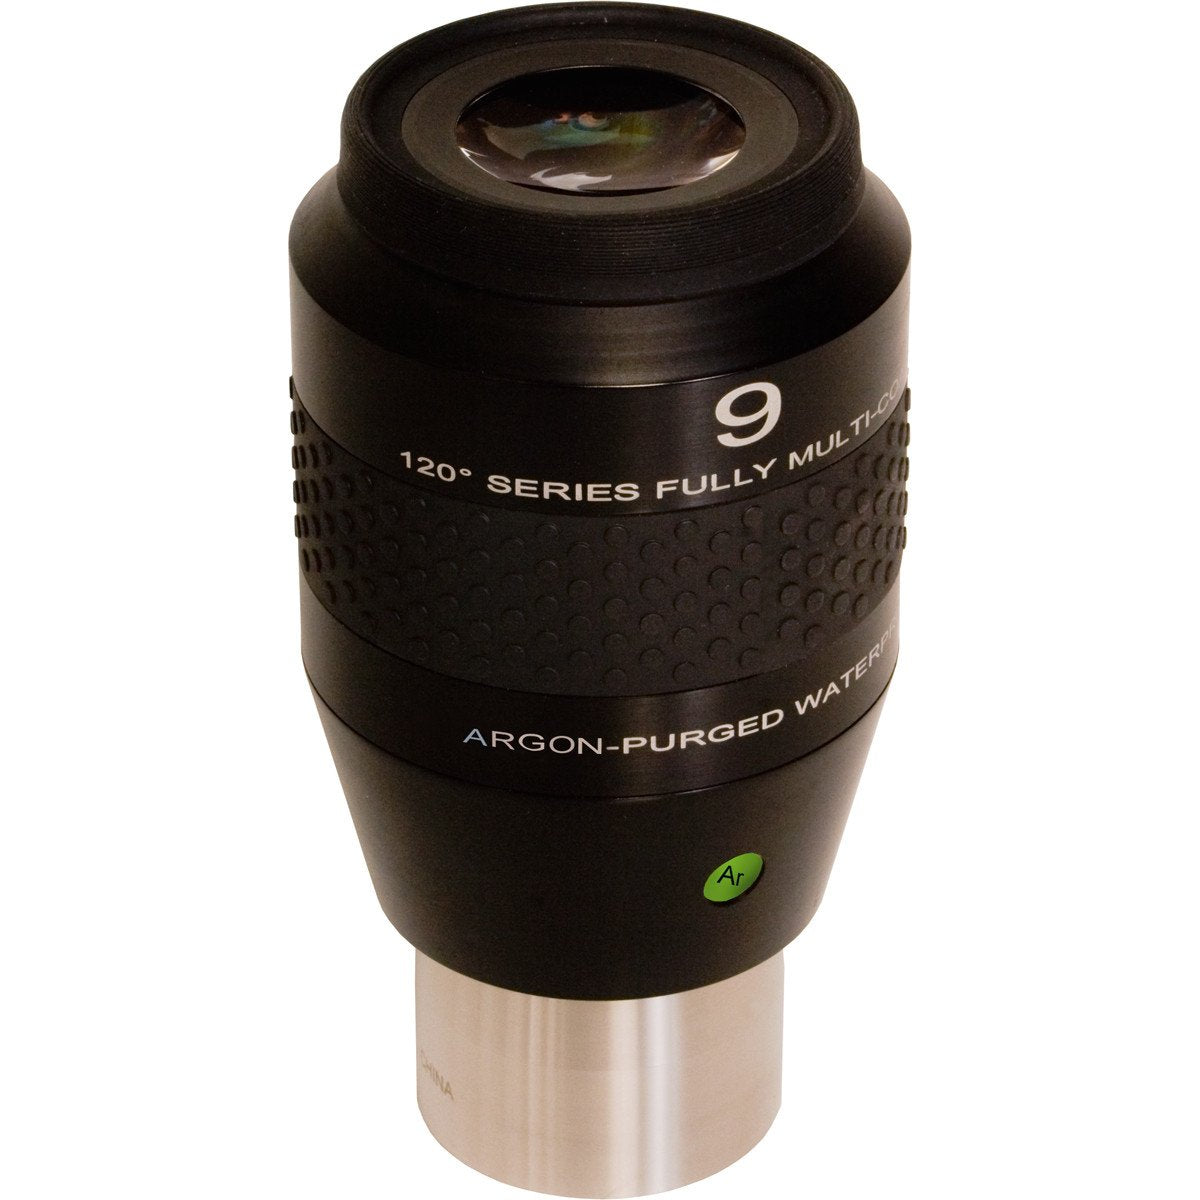 Explore Scientific 120° Series 9mm Waterproof Eyepiece EPWP12009-01 - CoreScientifics-Telescopes, Sport Optics & More